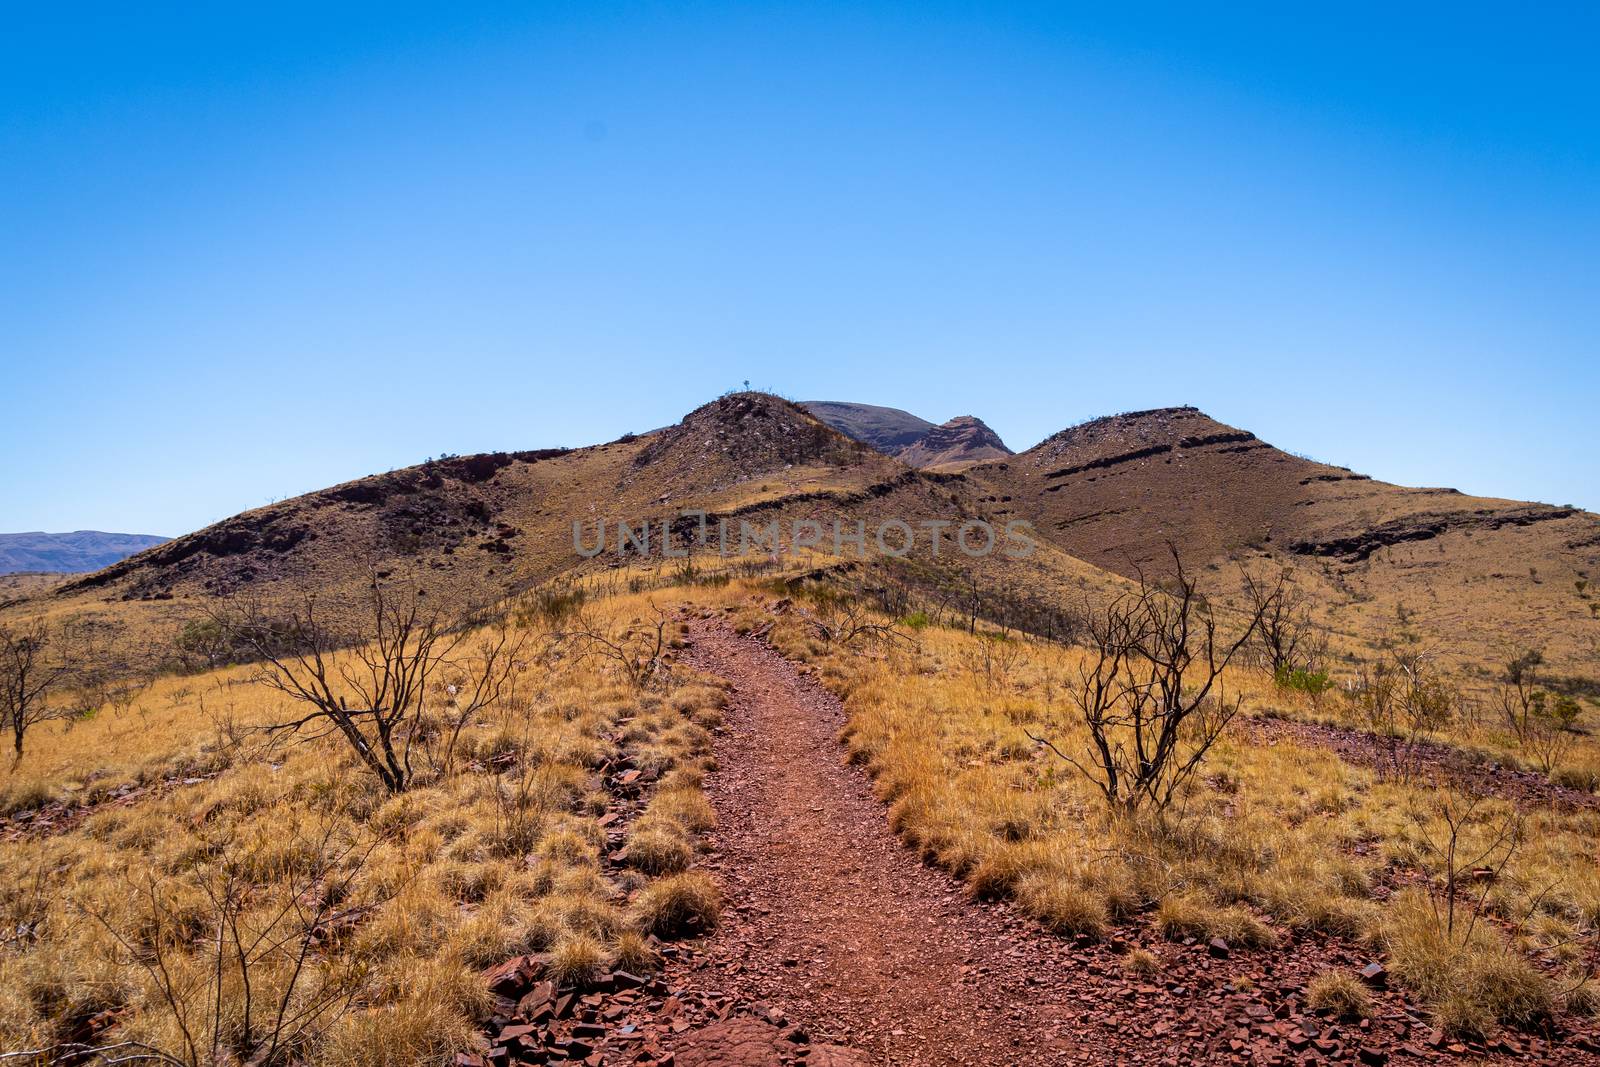 Mount Bruce hiking path leading towards the mountain top Karijini National Park Australia